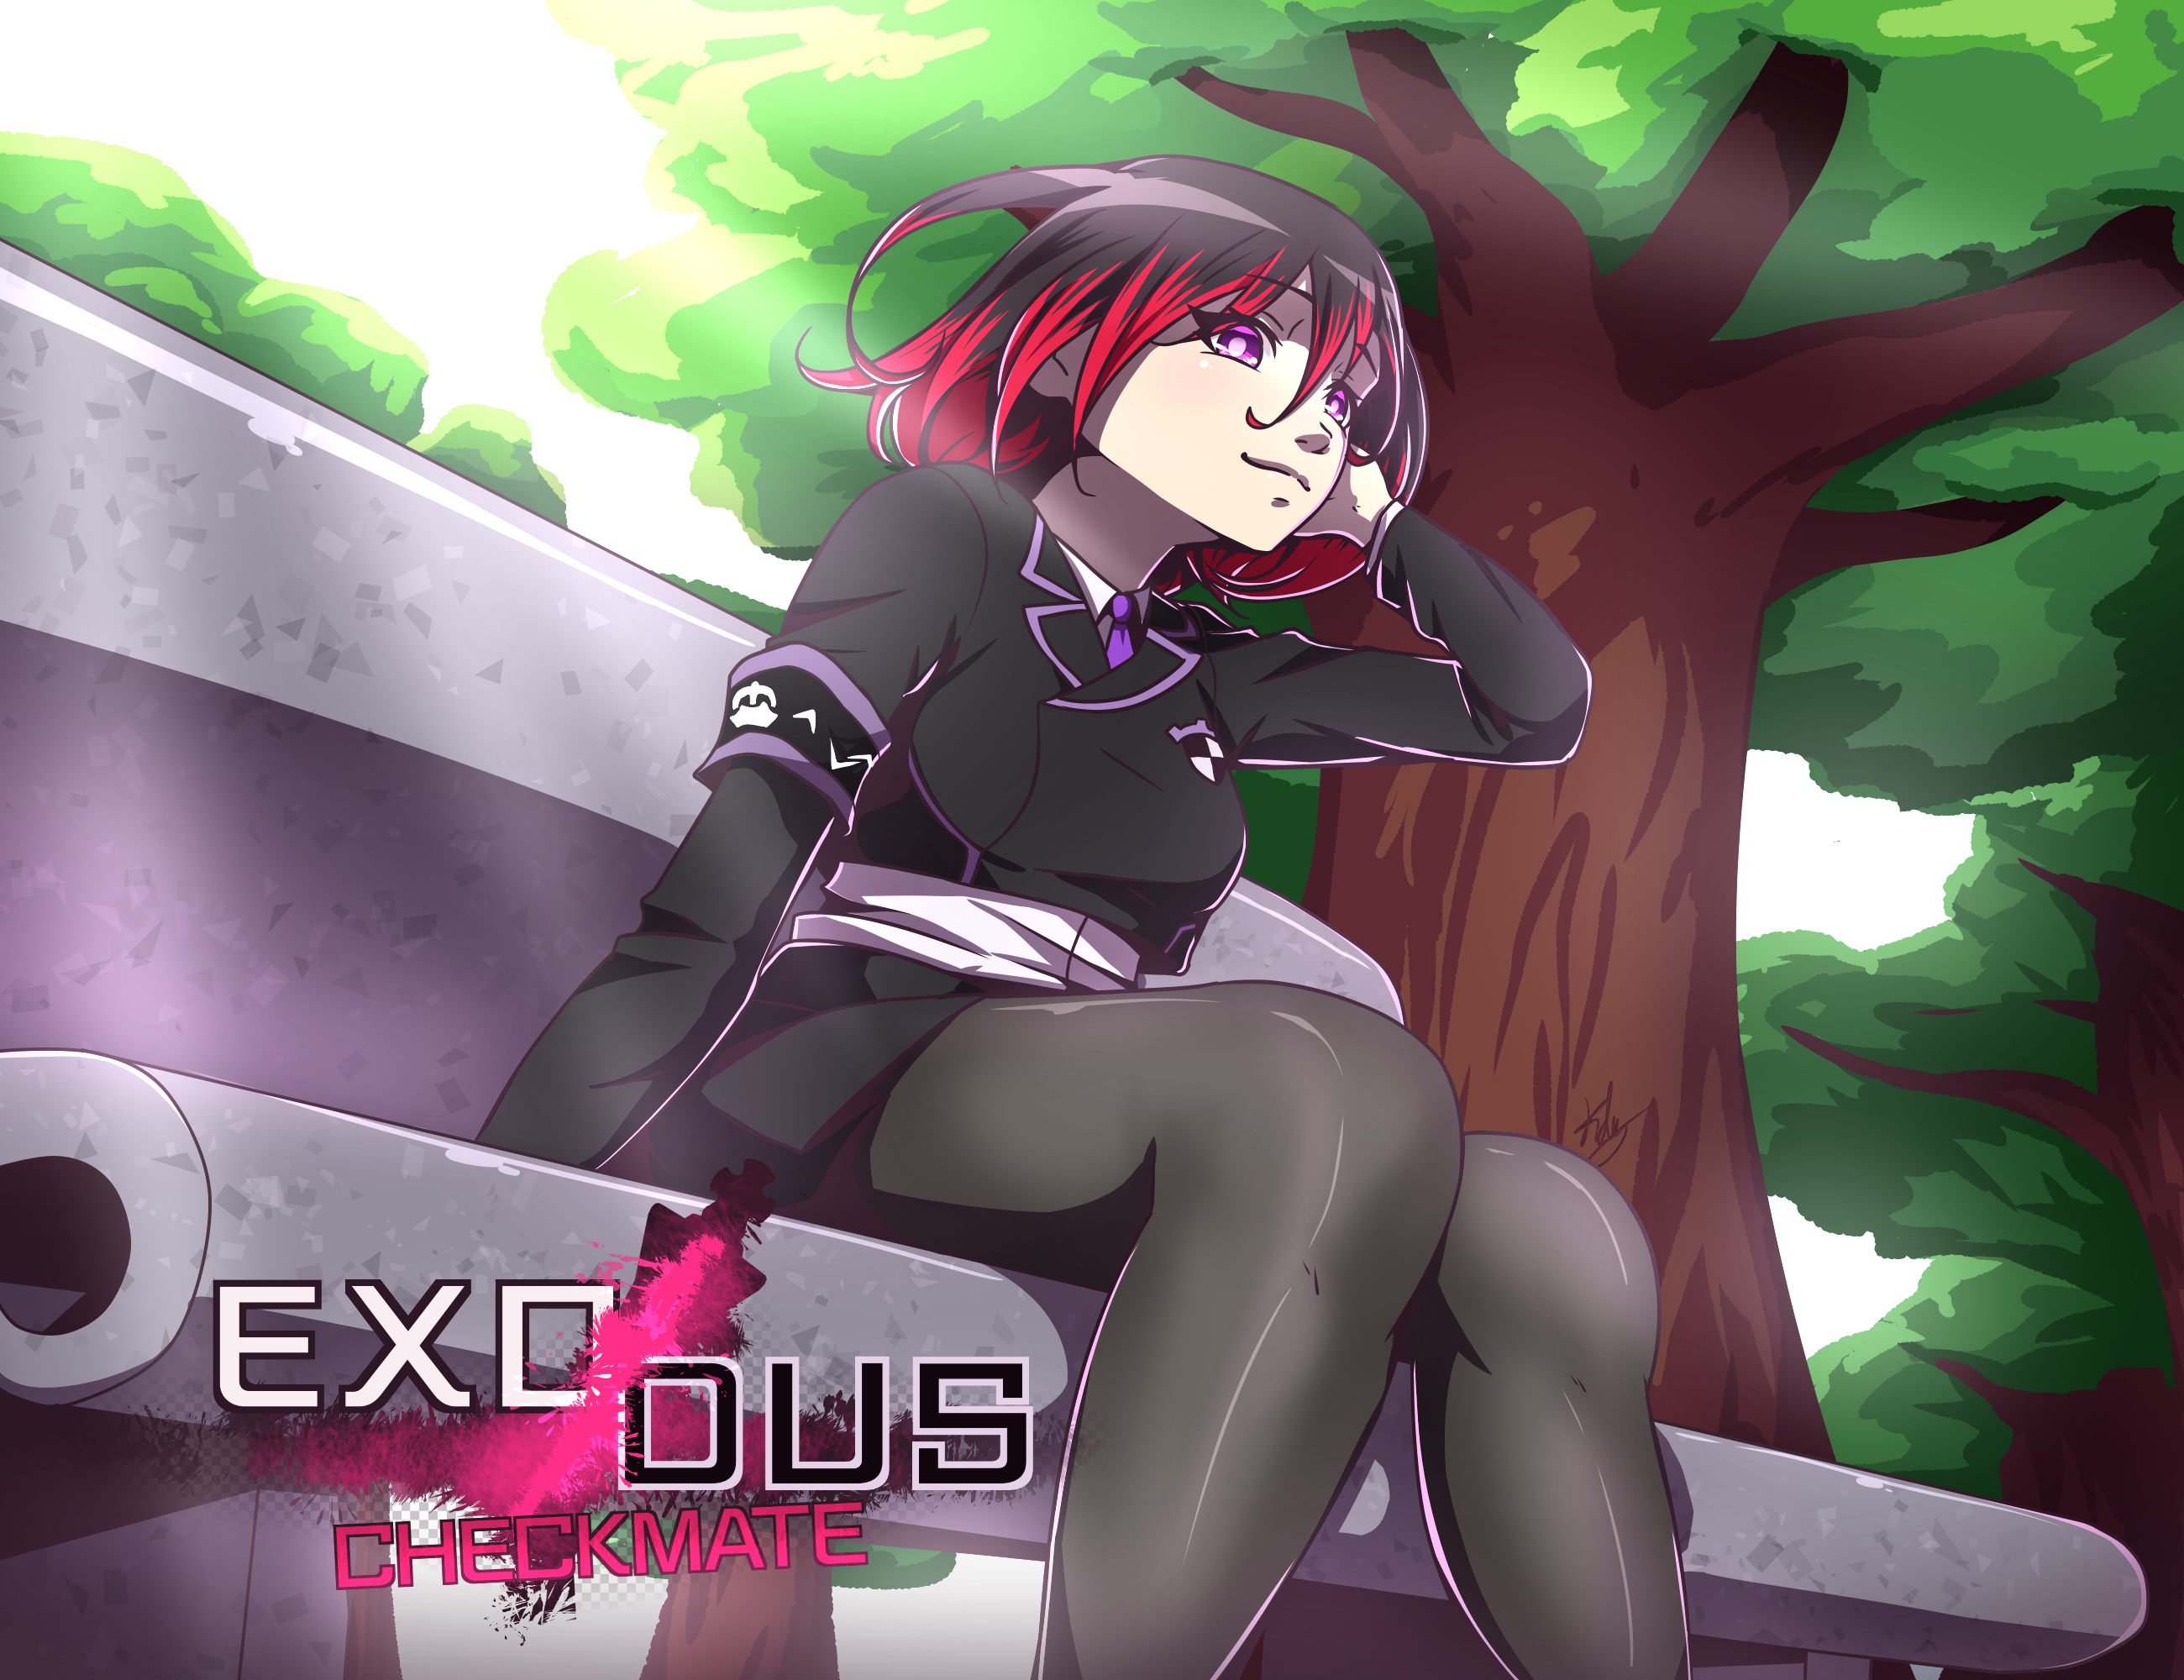 Exodus Checkmate by NinjaDaLua